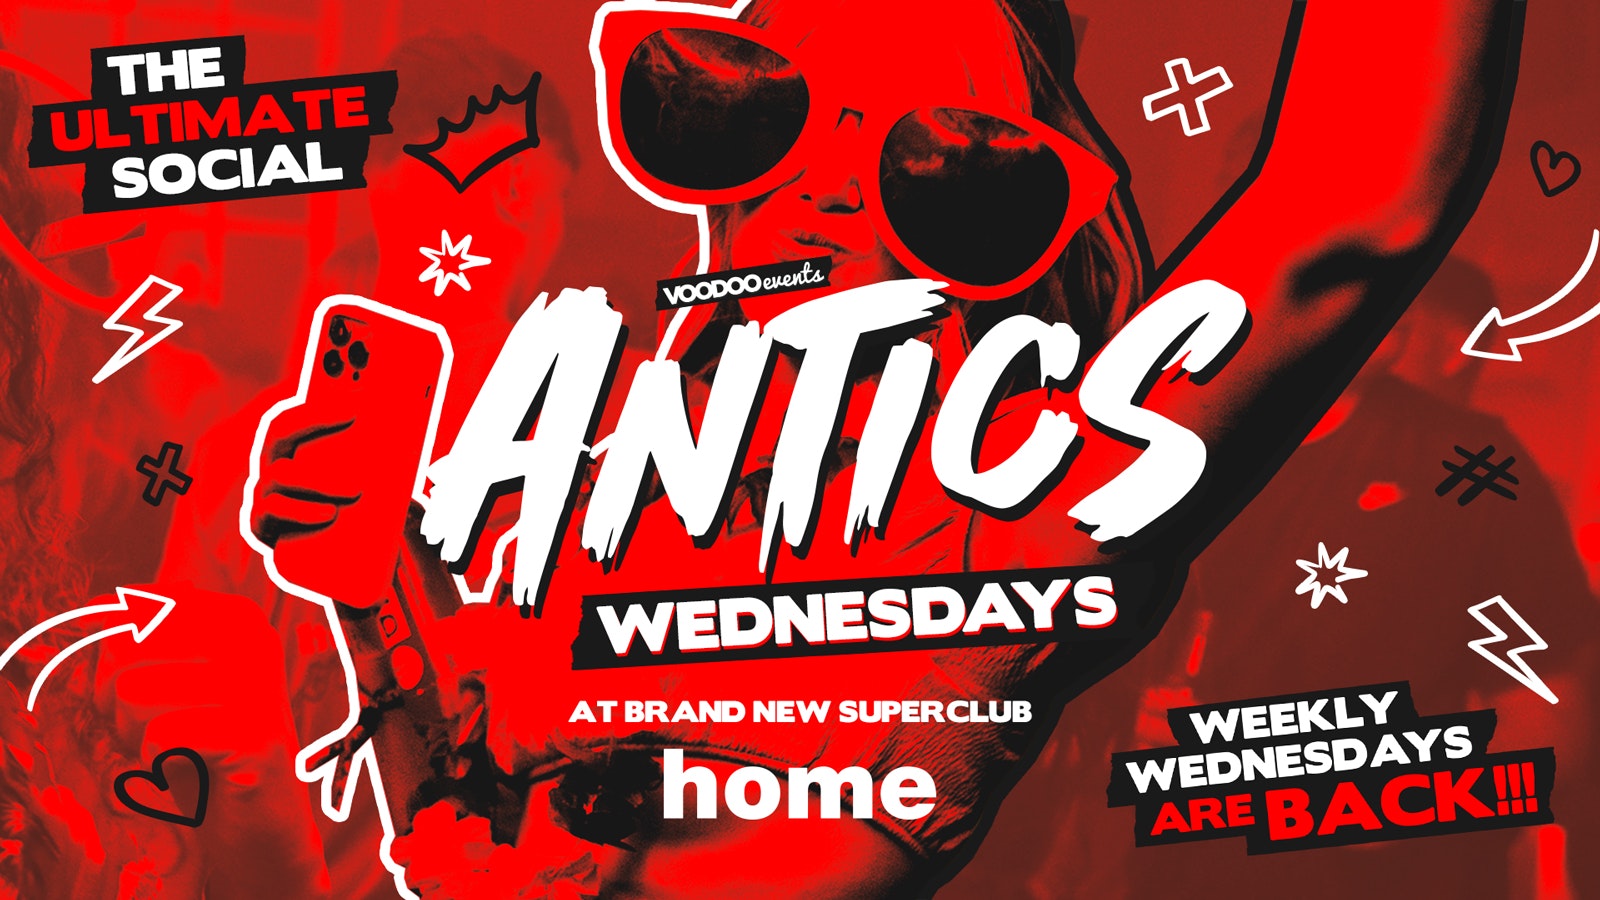 Antics @ THE BRAND NEW SUPER CLUB HOME – Wednesday 4th September